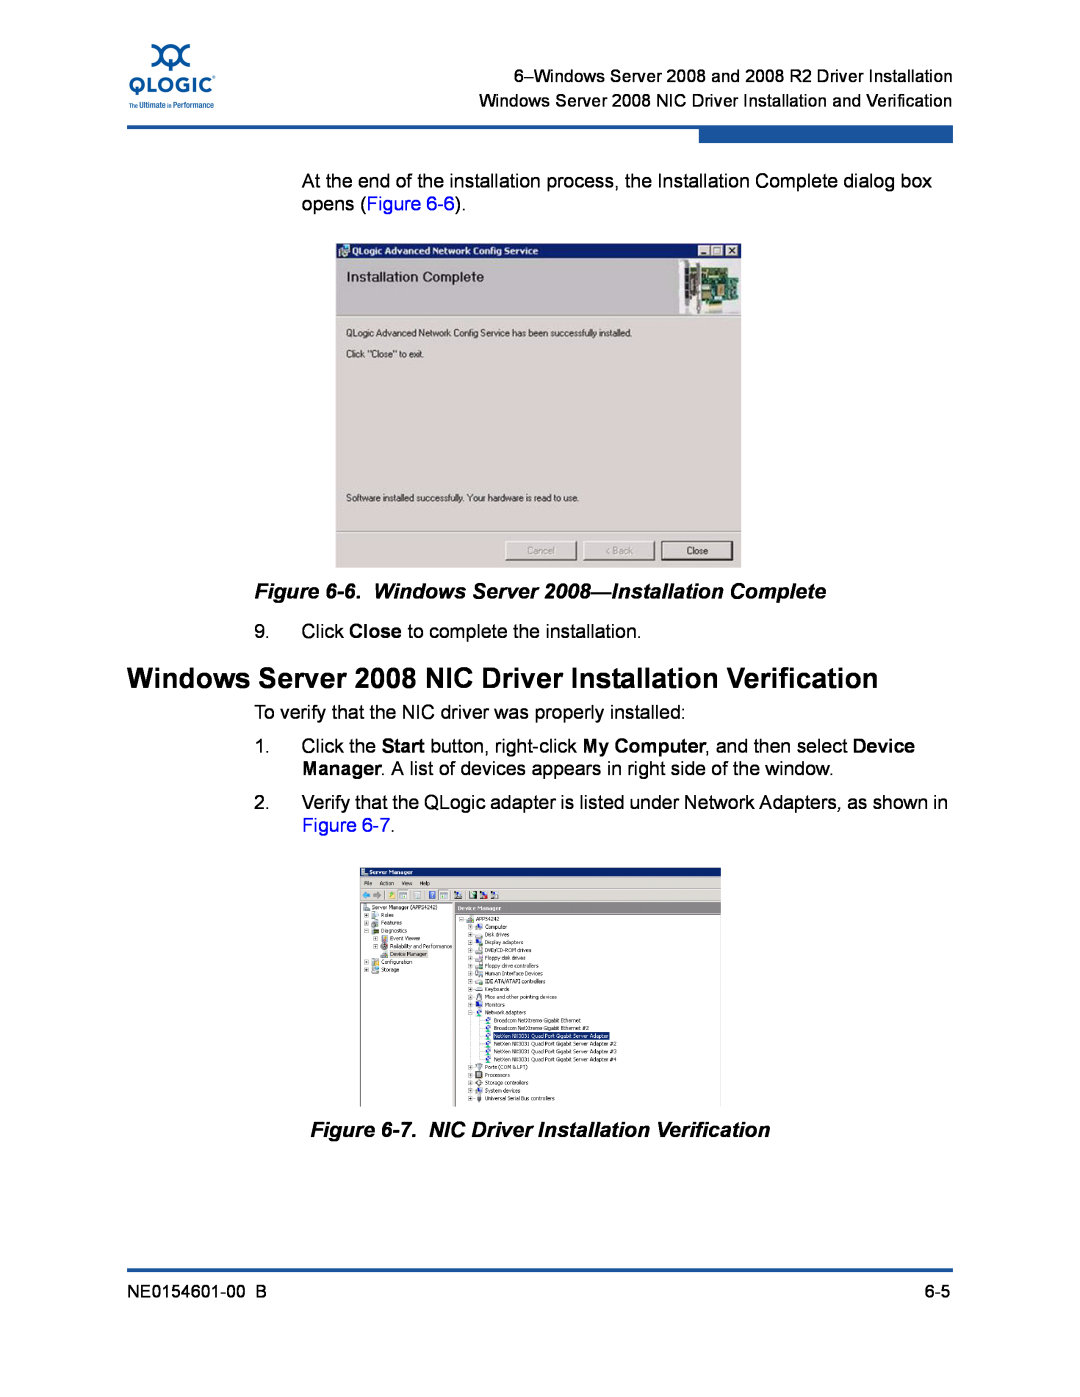 Q-Logic 3000, 3100 Windows Server 2008 NIC Driver Installation Verification, 6. Windows Server 2008-Installation Complete 